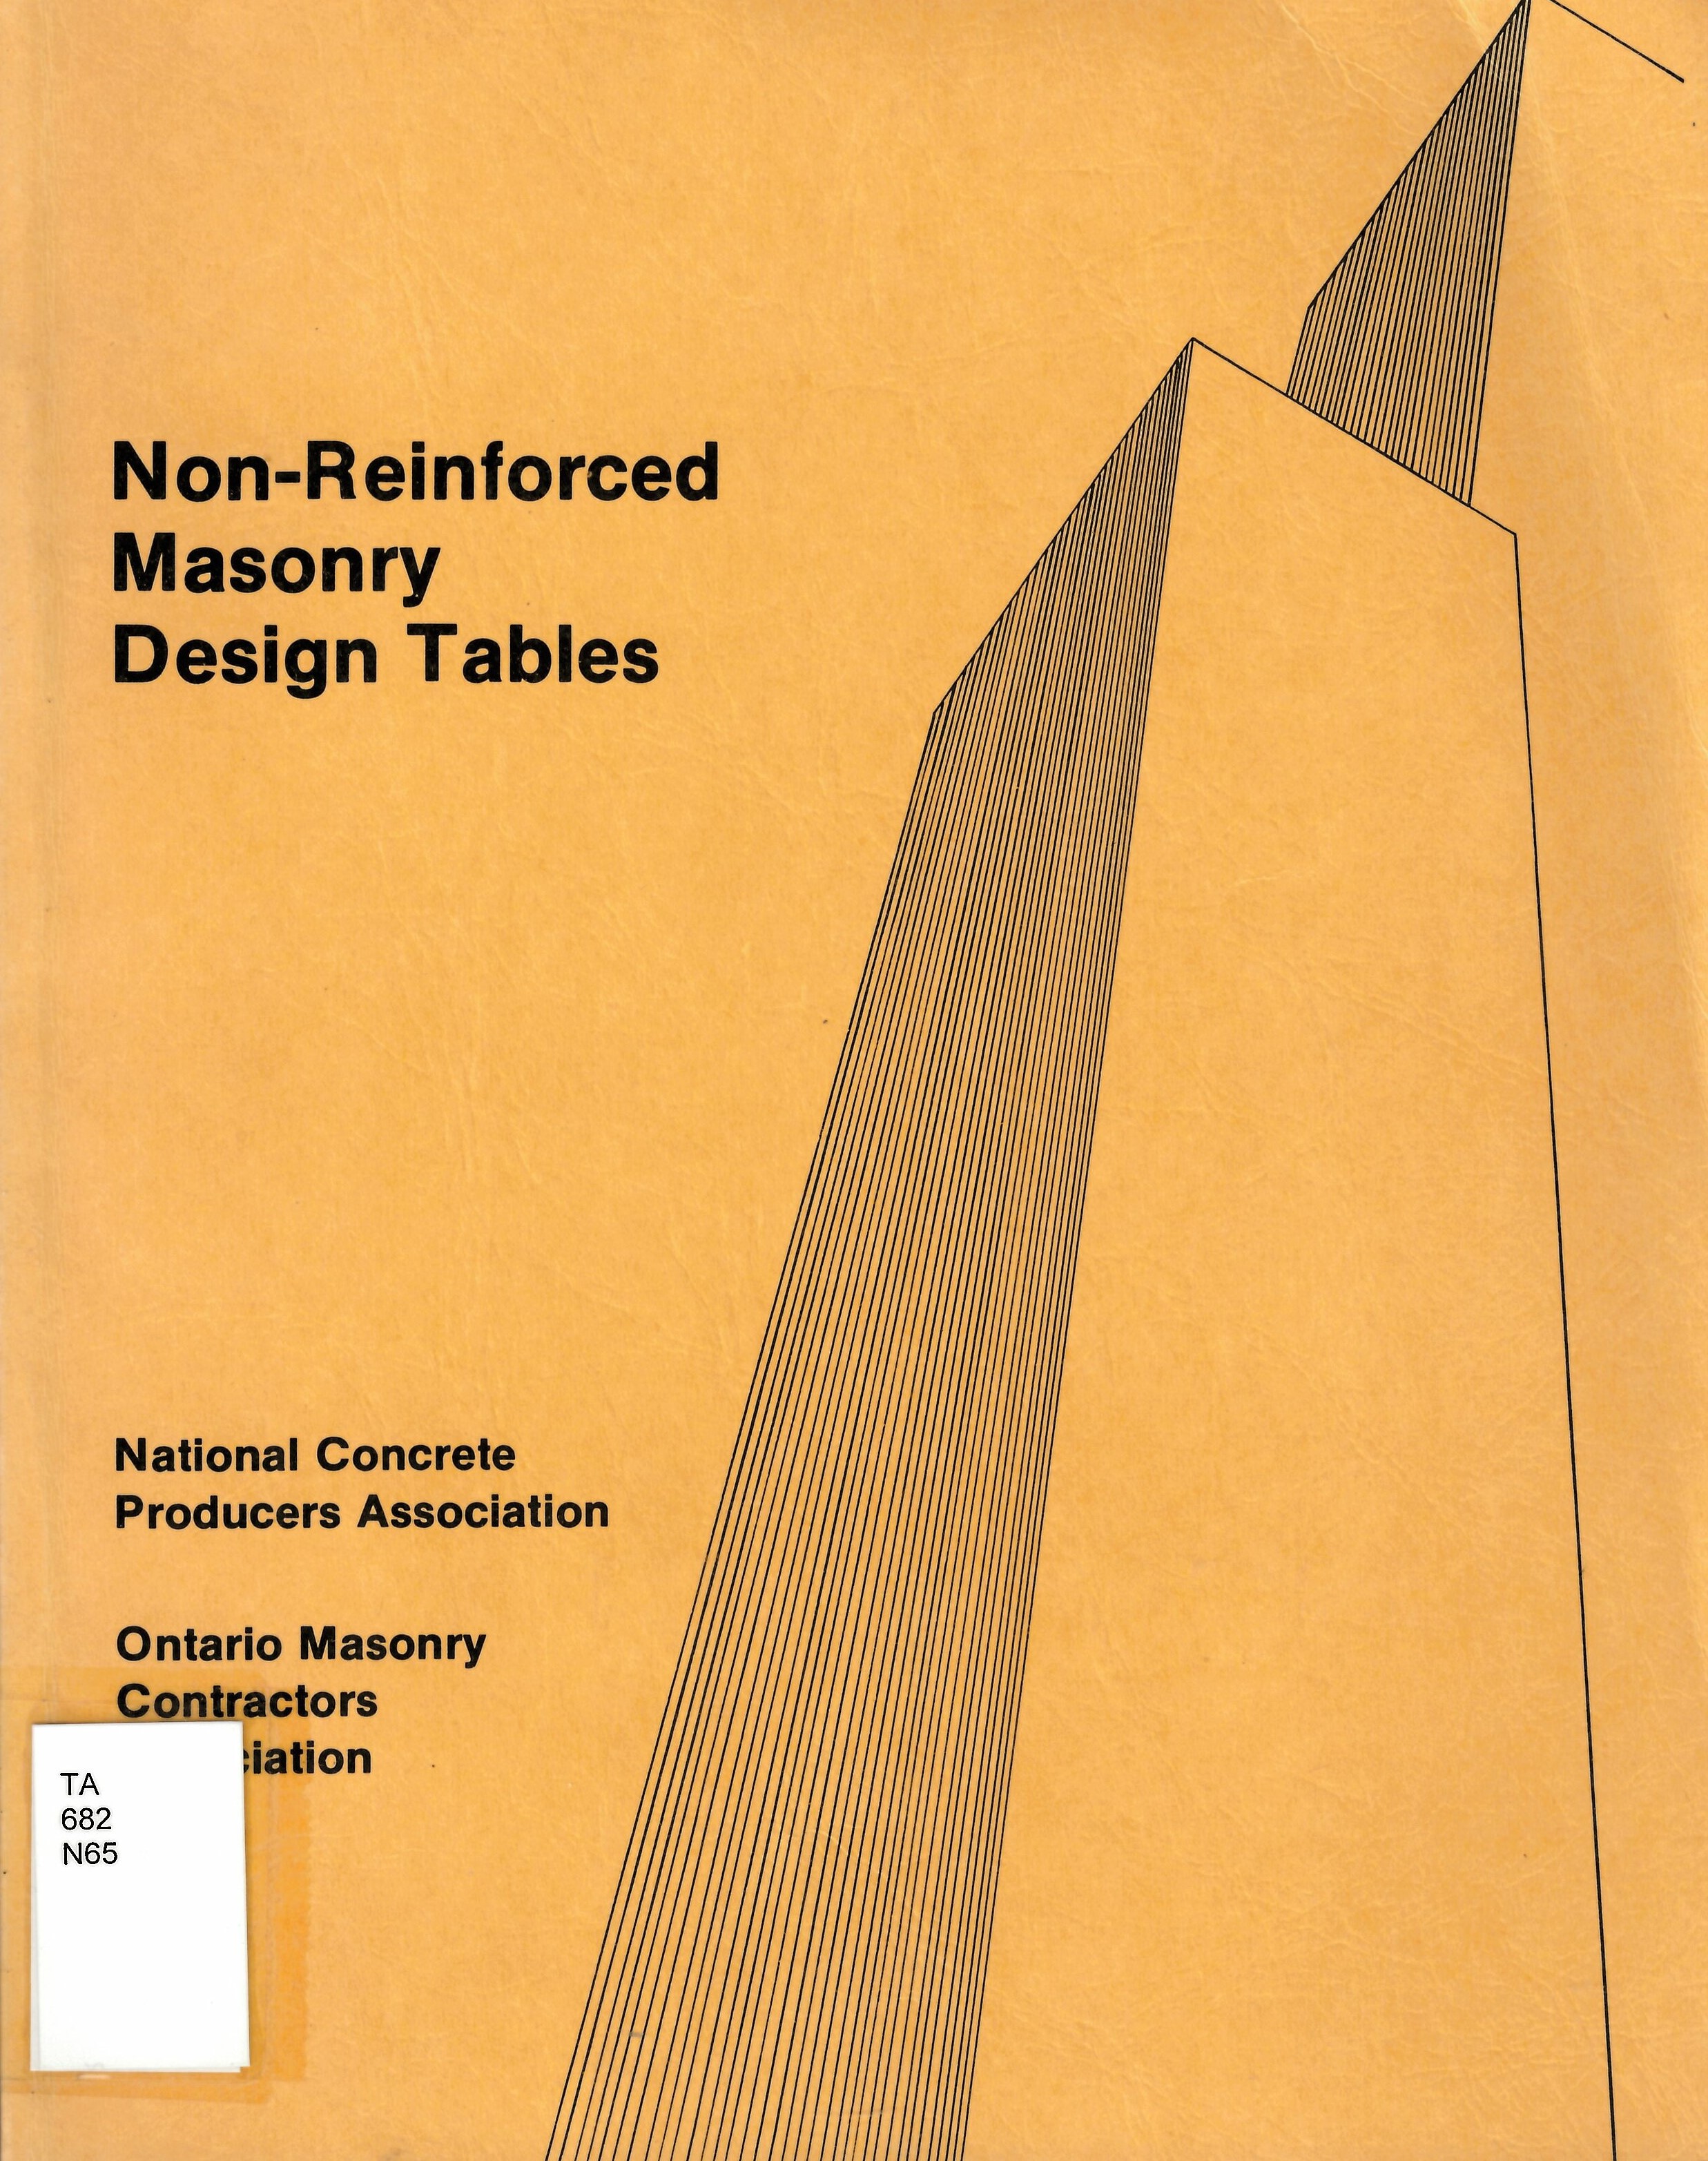 Non-reinforced masonry design tables